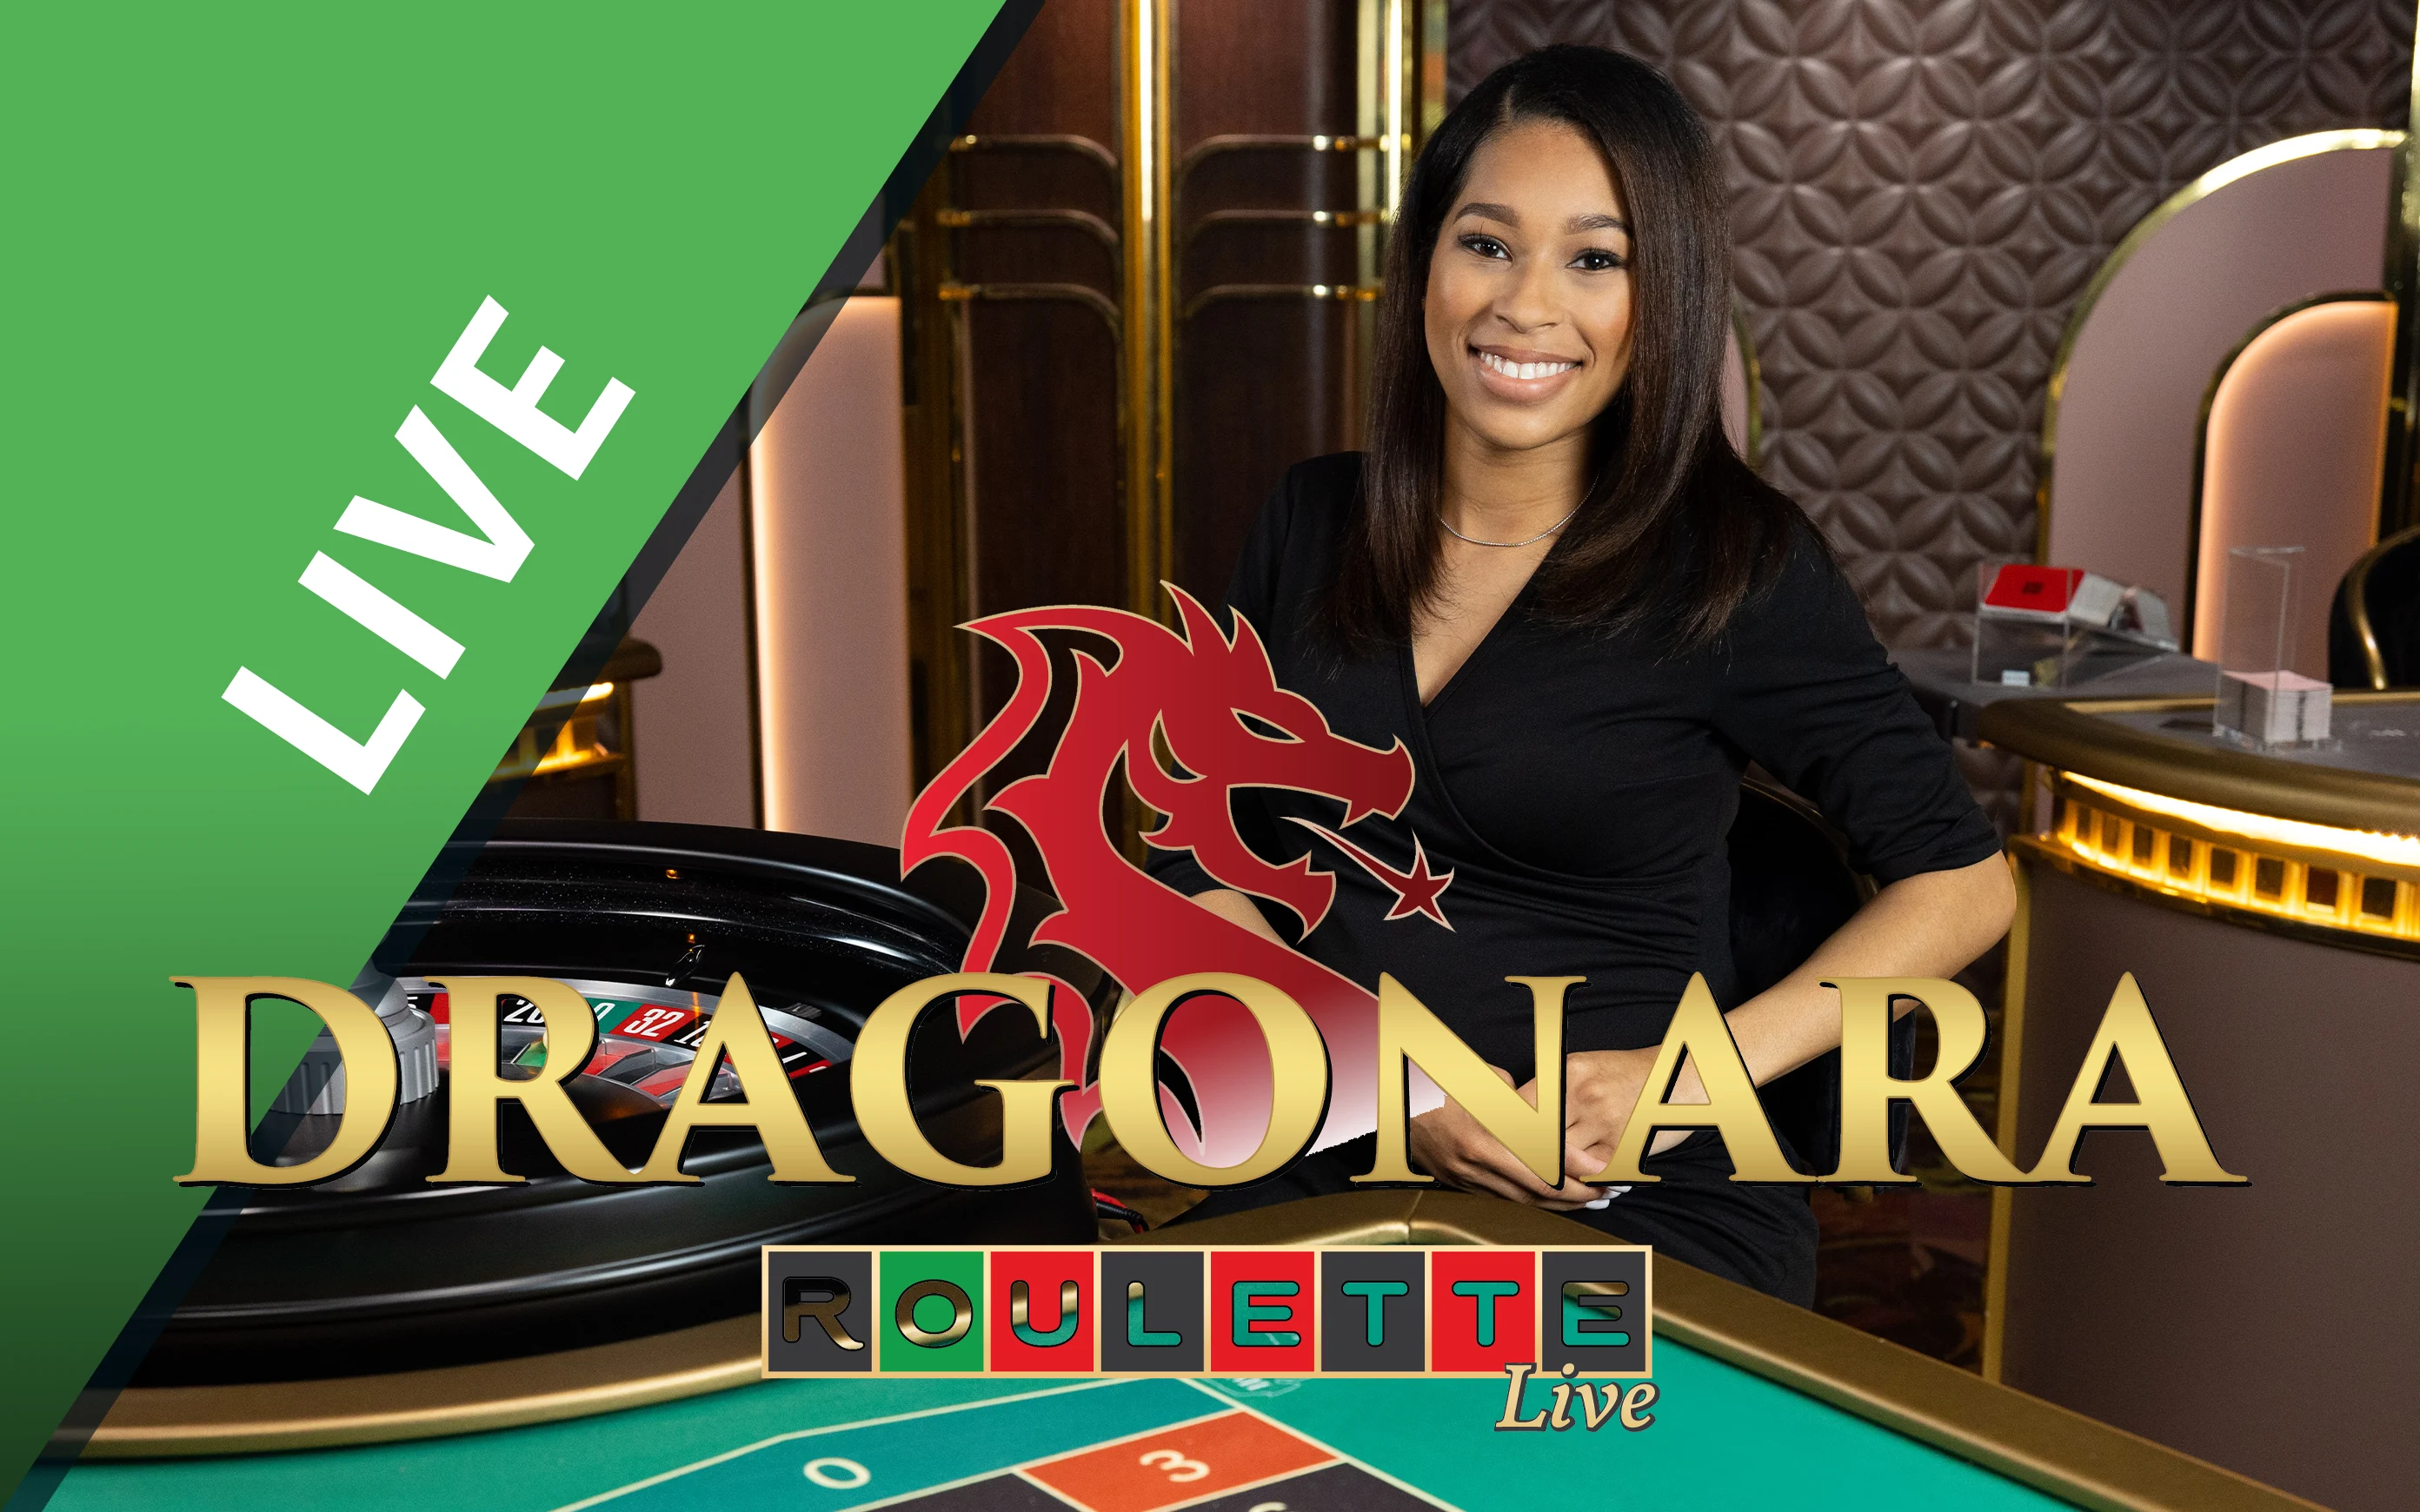 Speel Dragonara Roulette op Starcasino.be online casino